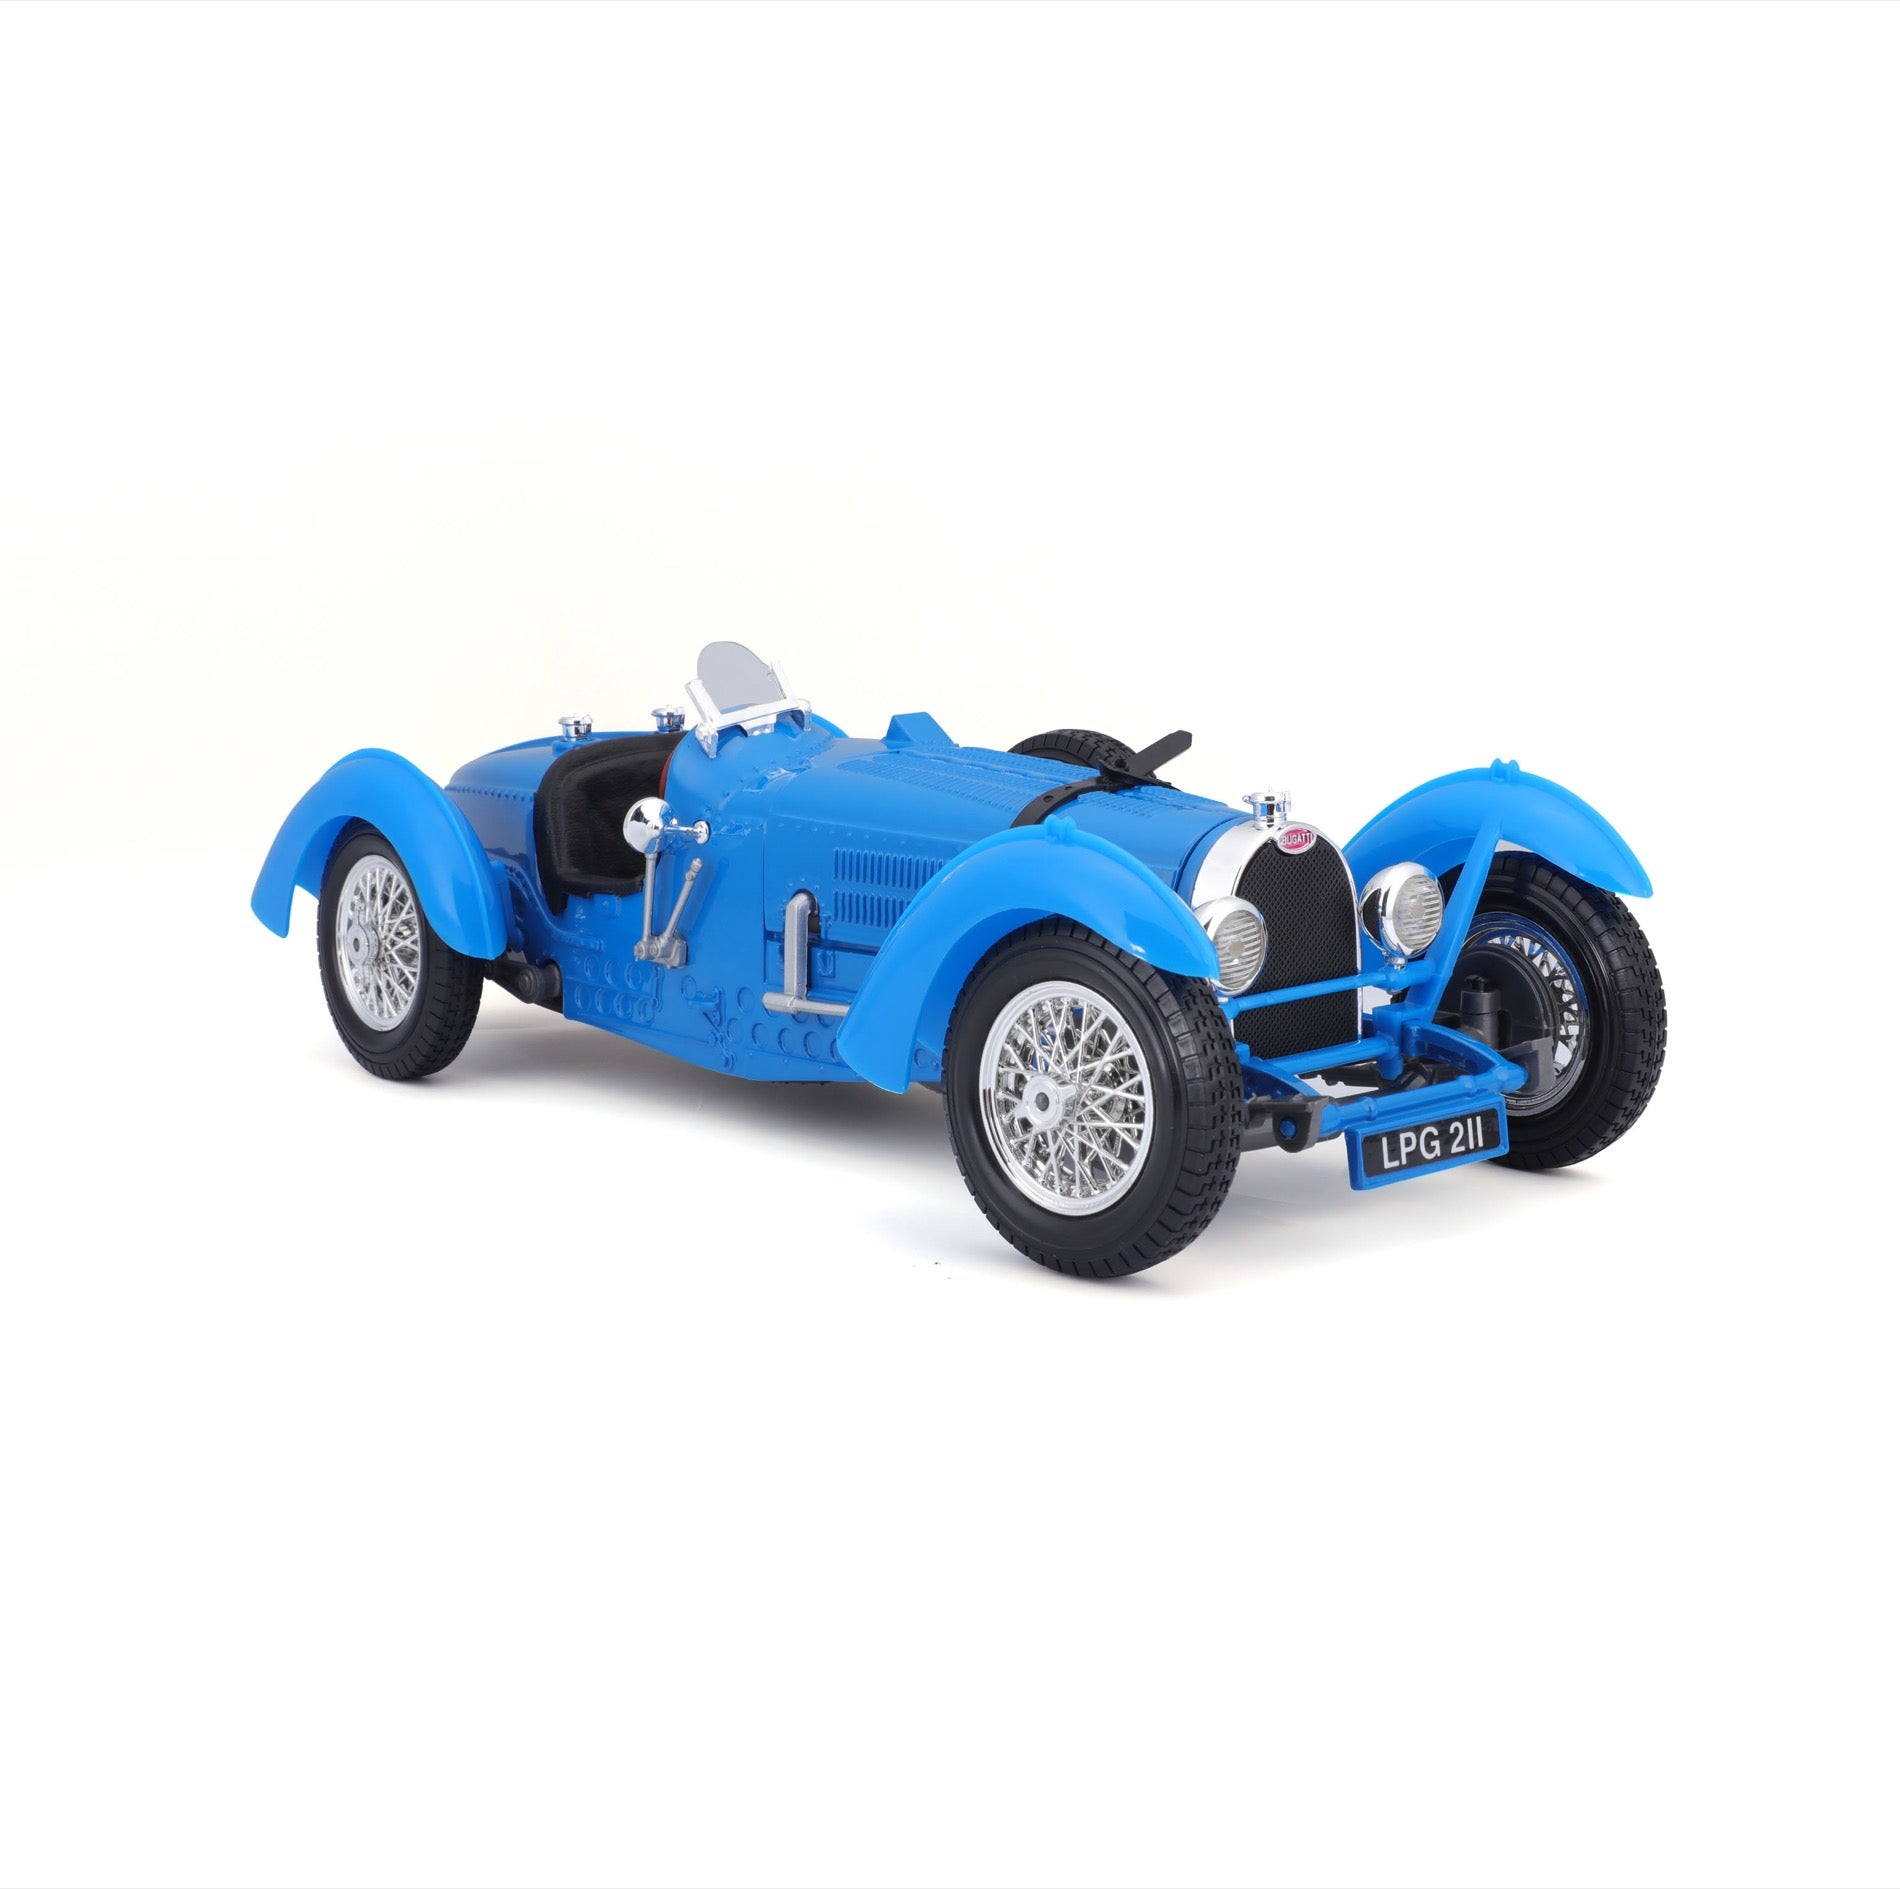 18-12062 Bburago - Bugatti TYPE 59 Blue  - 1:18 - blu